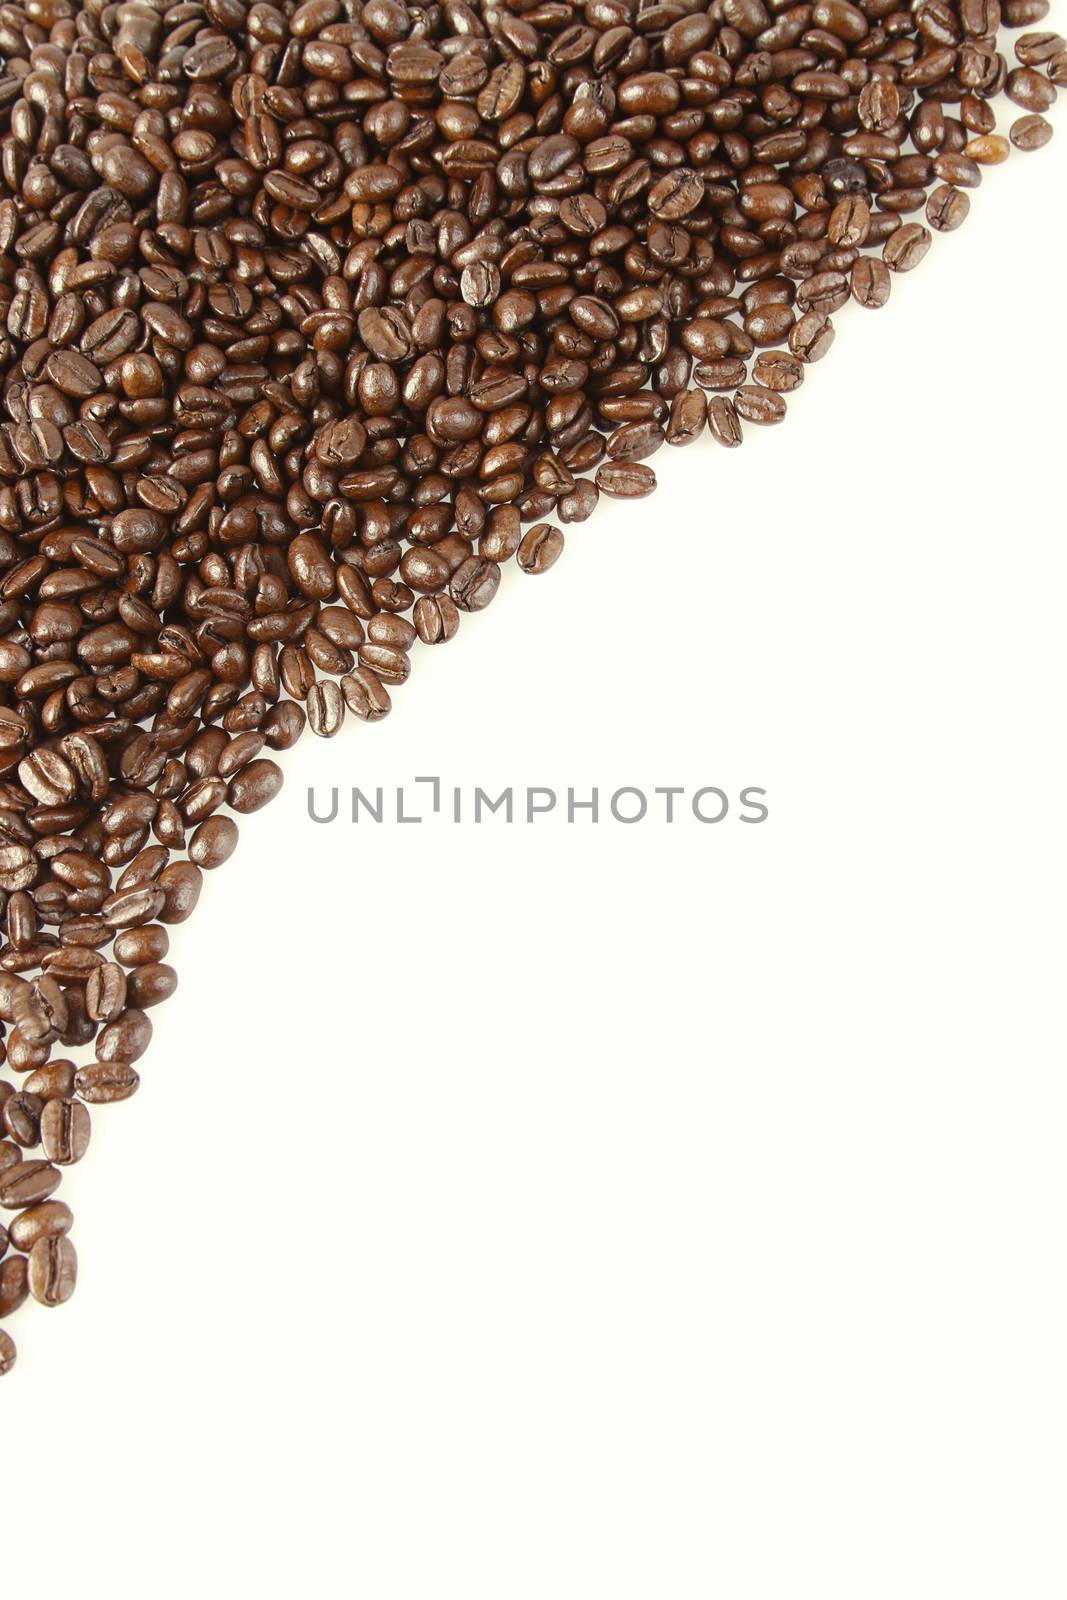 Coffee beans  by Stillfx